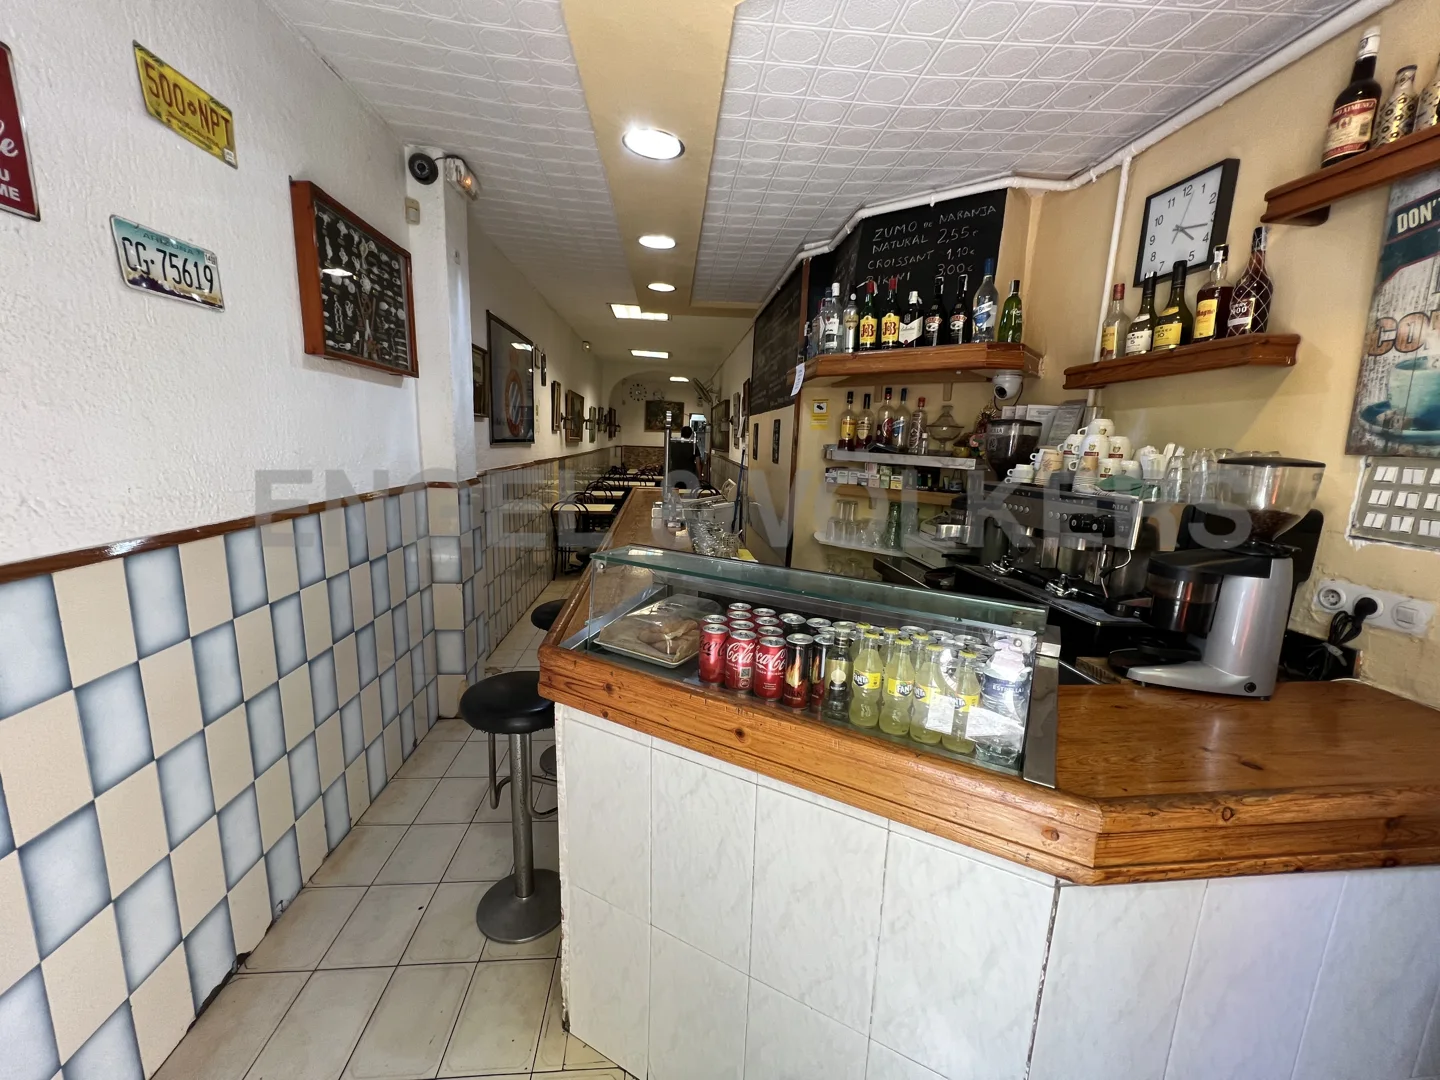 Pequeño restaurante a reformar muy cerca de Plaza Espanya